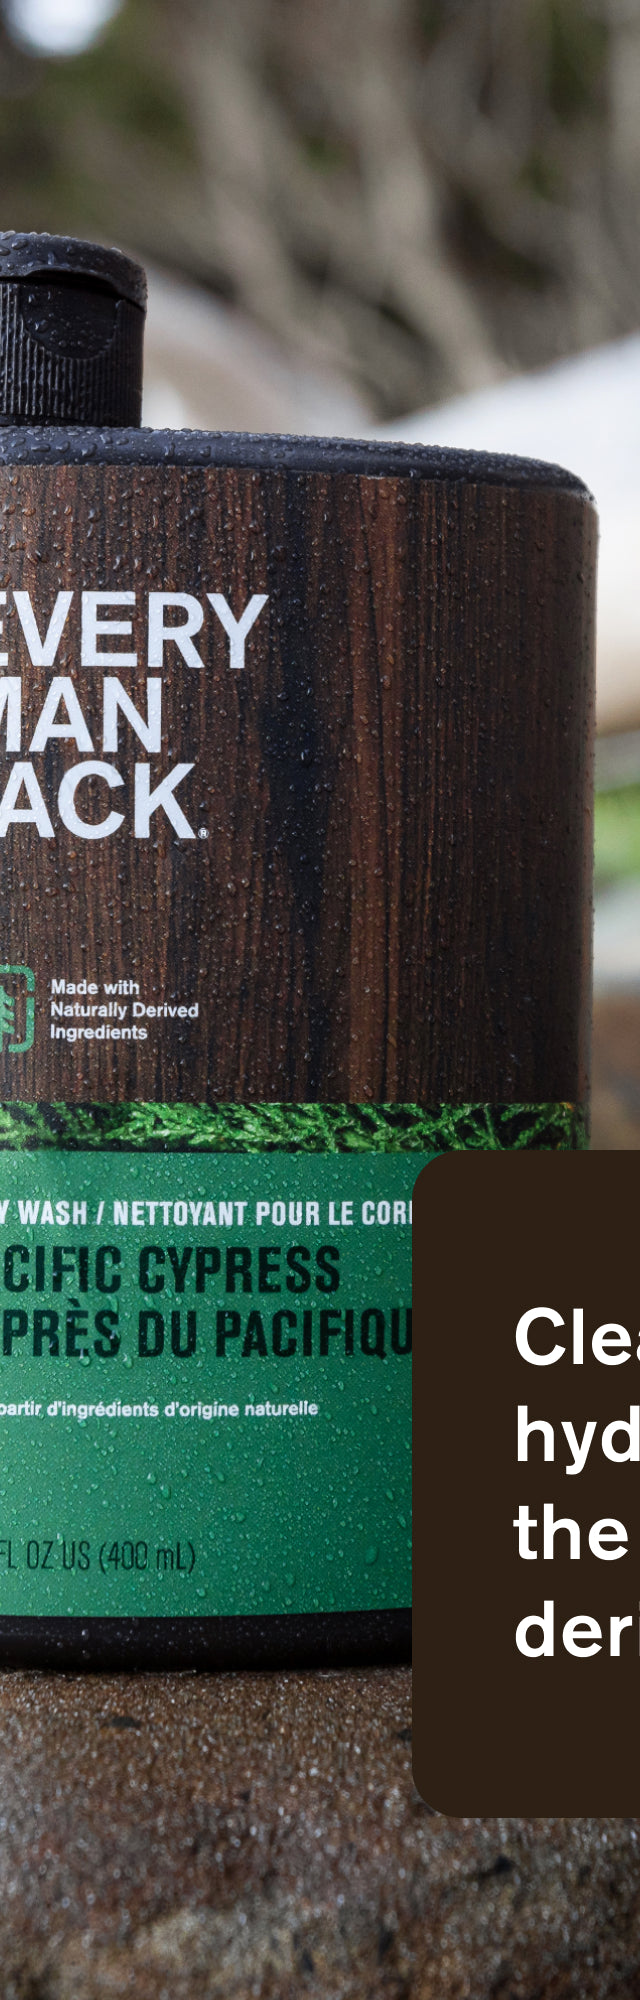 Pacific Cypress / Standard